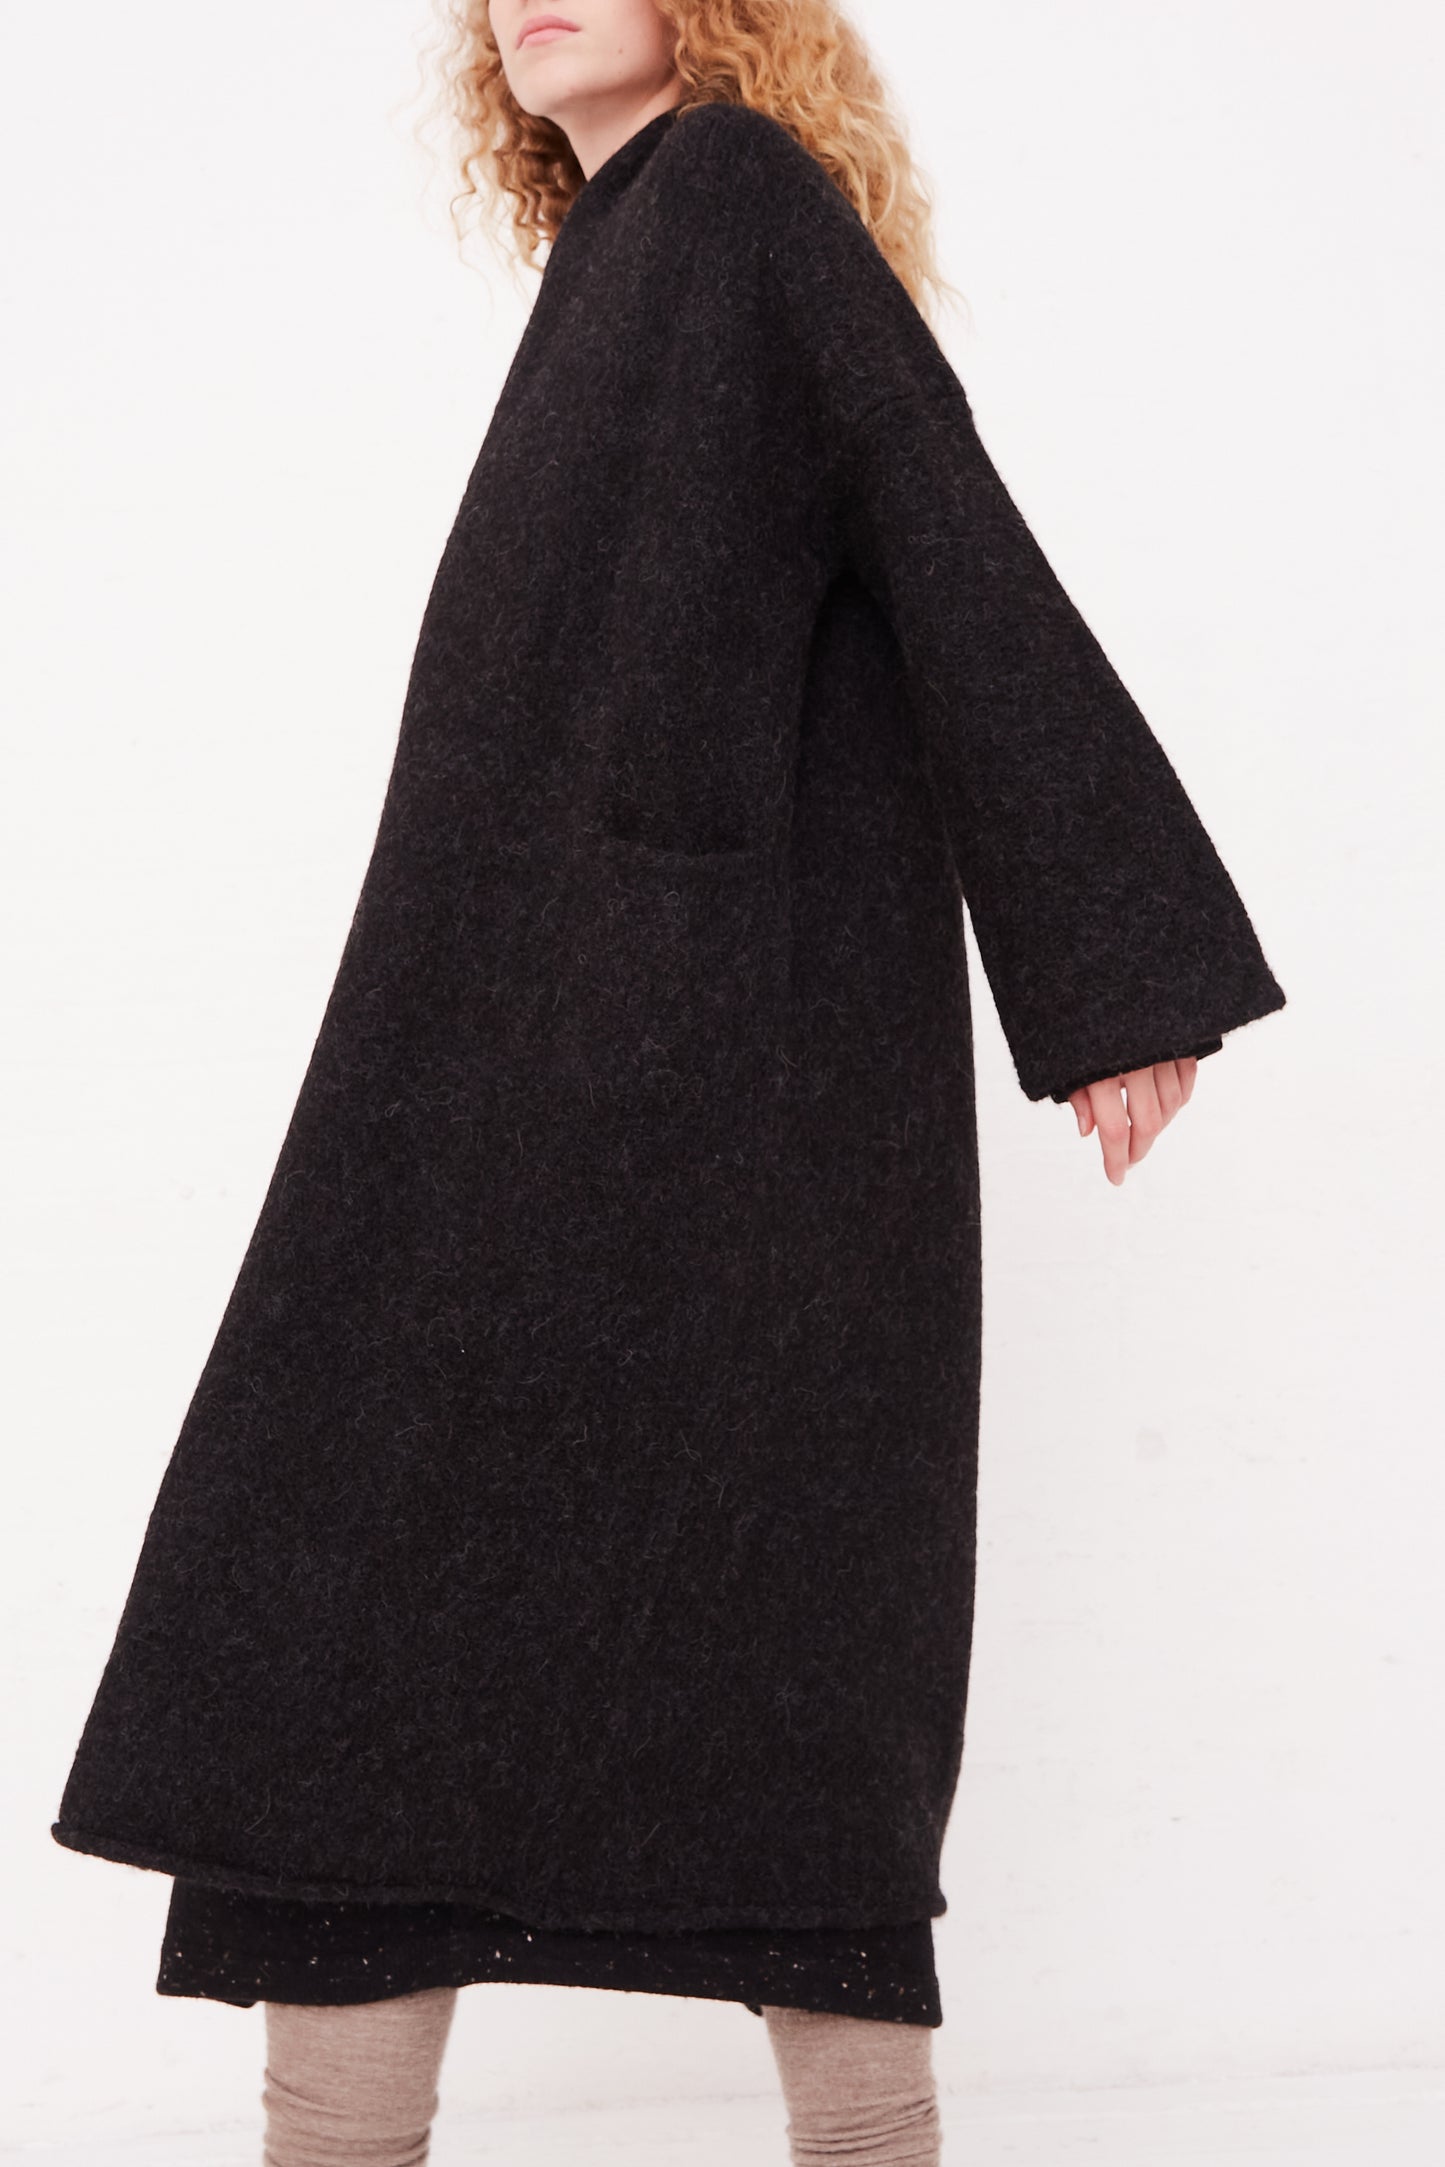 A woman wearing a Lauren Manoogian Long Shawl Cardigan in Black coat.